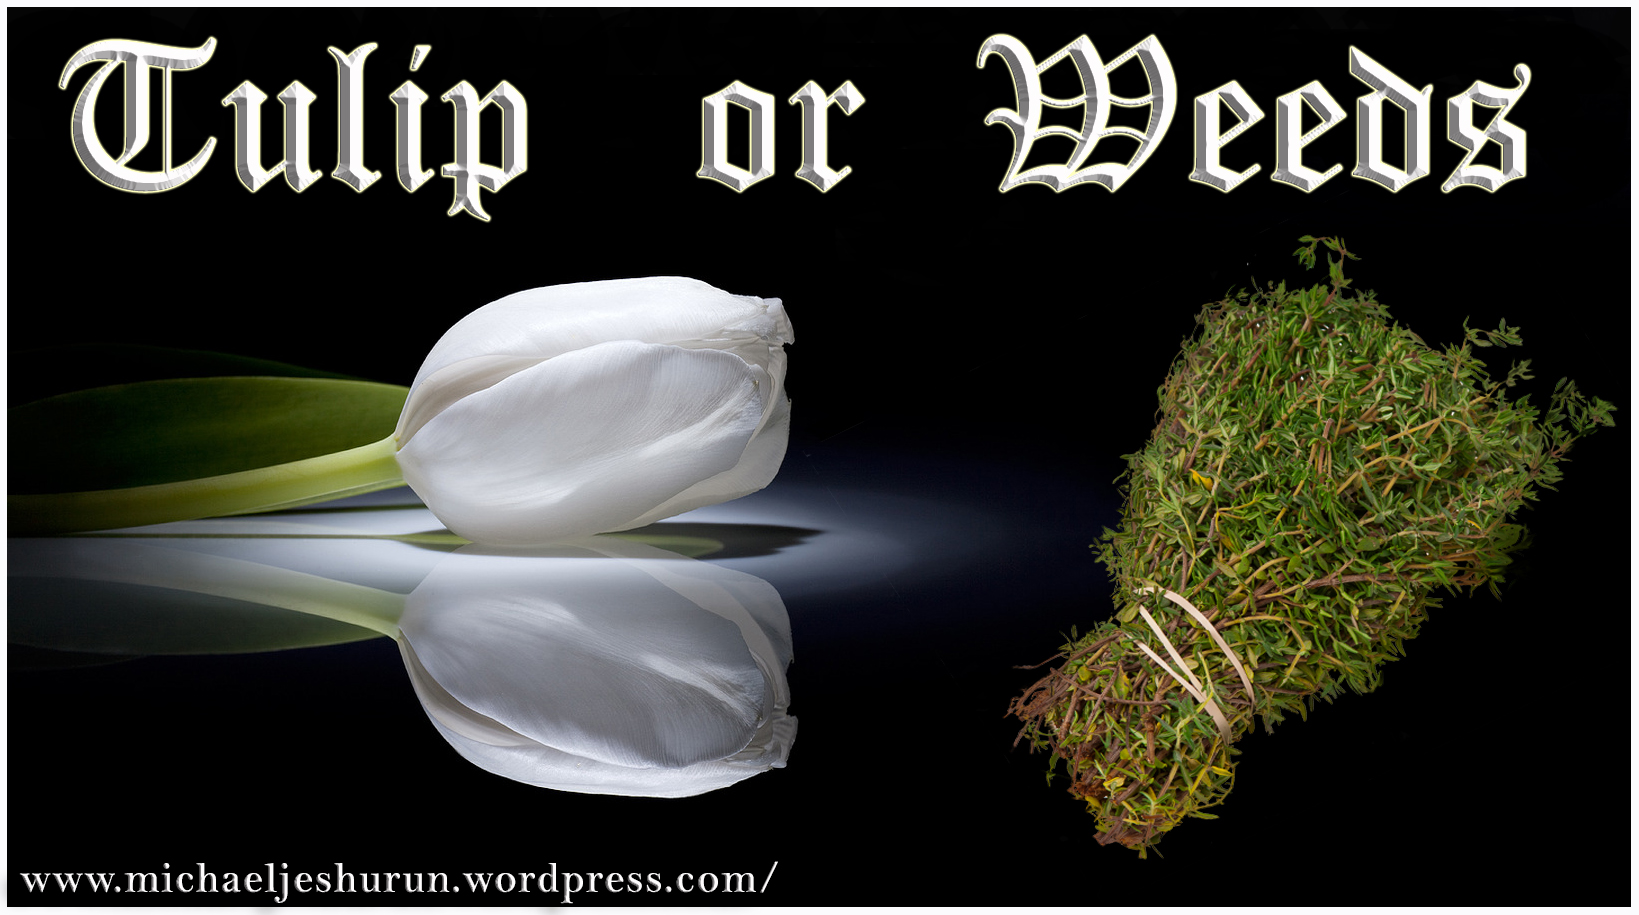 Tulip or Weeds